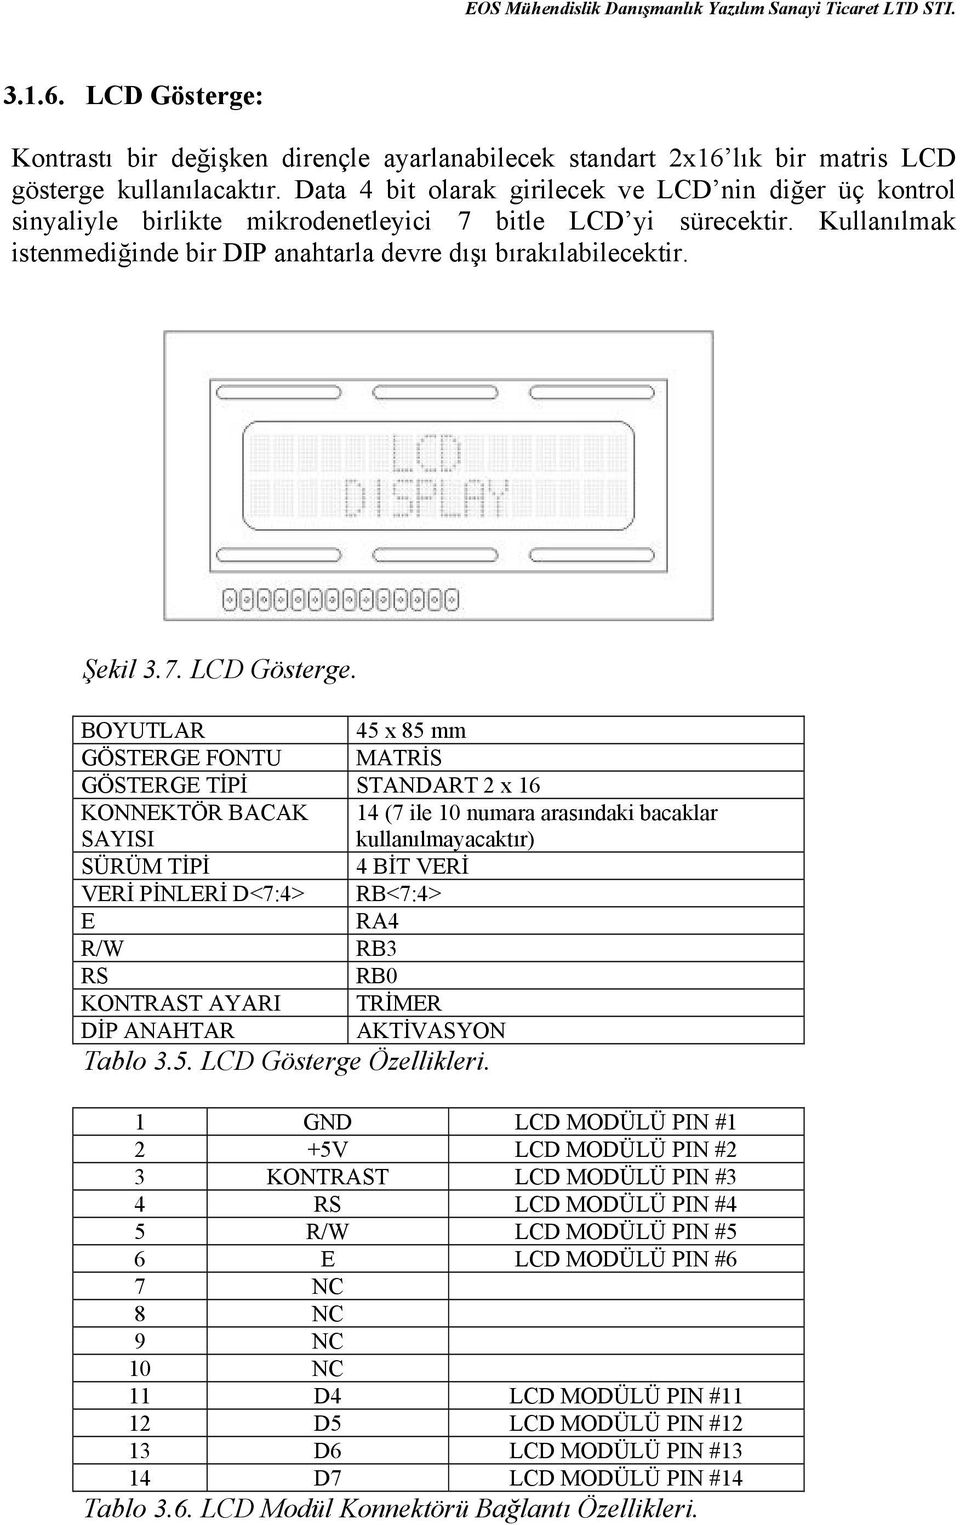 Şekil 3.7. LCD Gösterge.